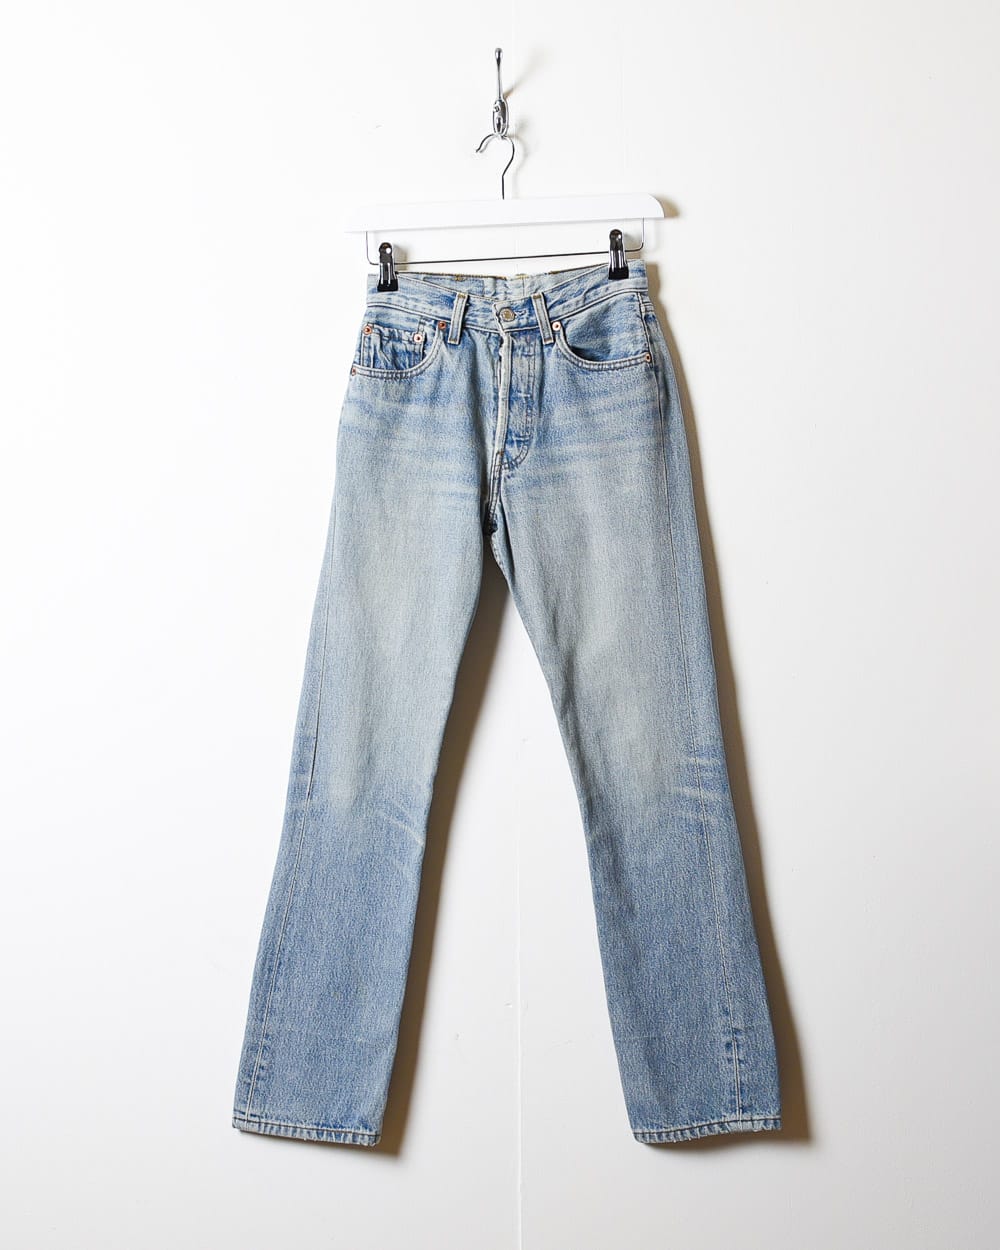 BabyBlue Levi's 501 Jeans - W24 L29